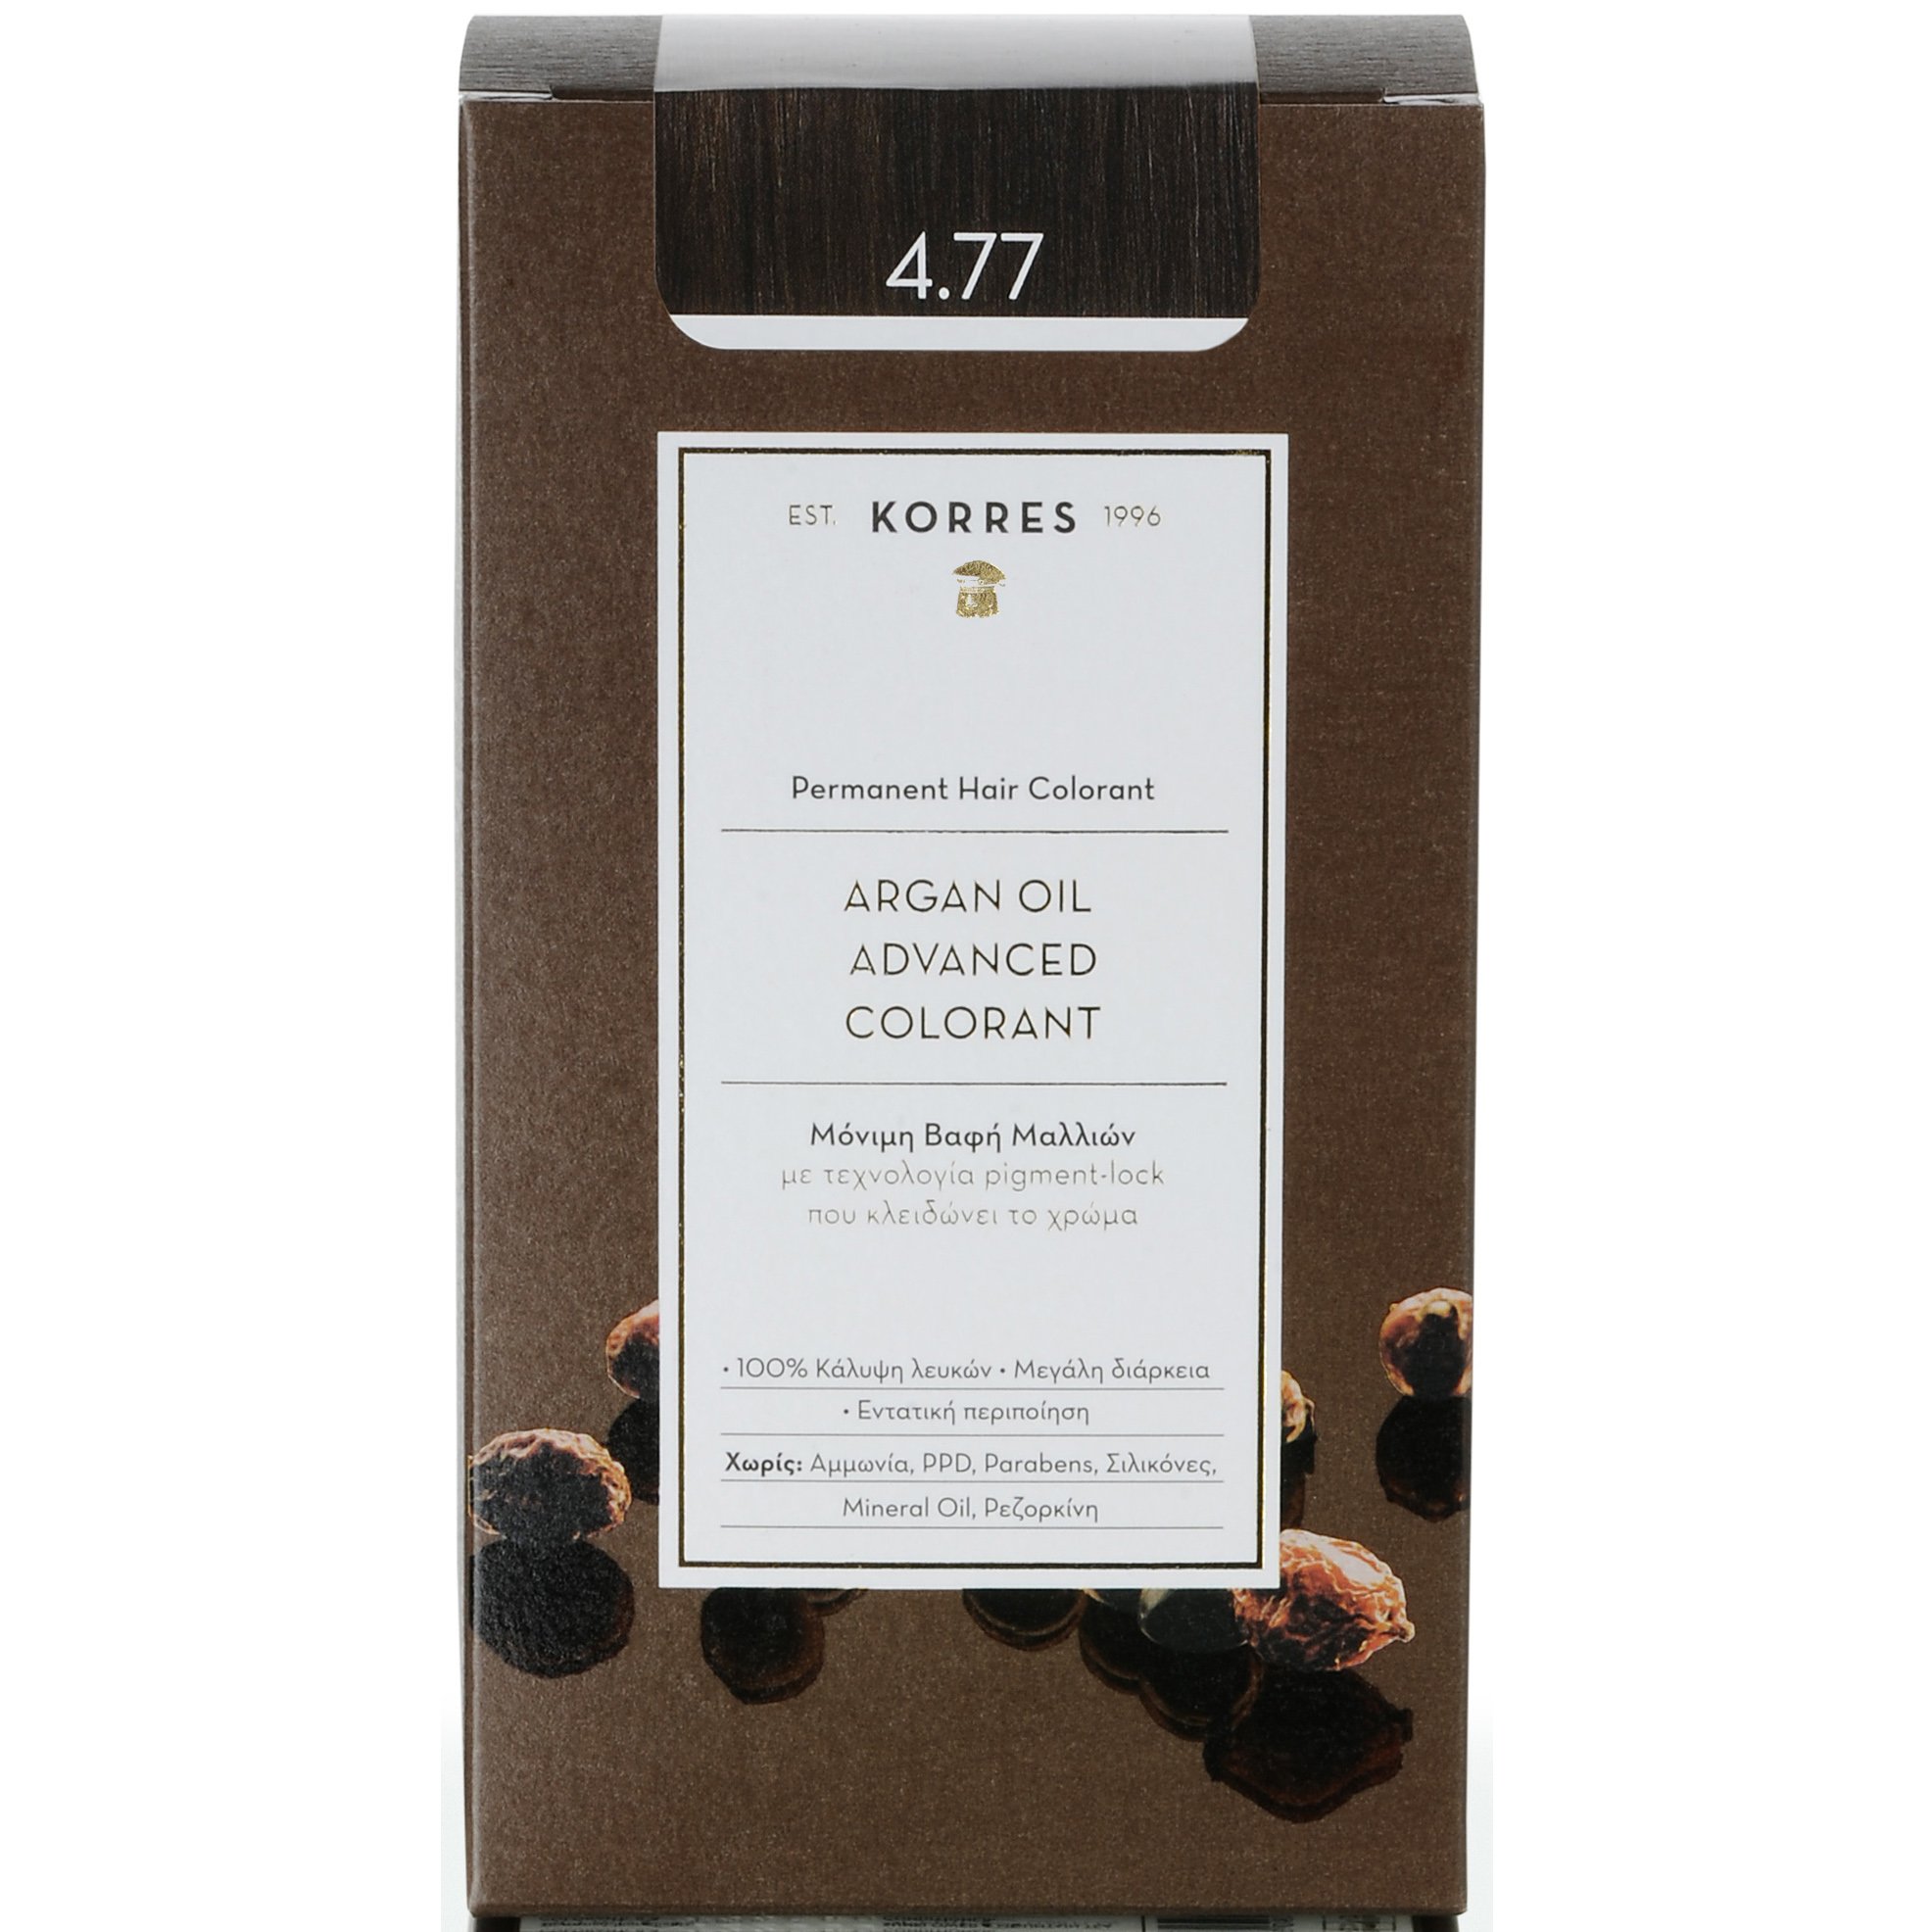 Korres Argan Oil Βαφή Μαλλιών Χωρίς Αμμωνία με Τεχνολογία Pigment-Lock που Κλειδώνει το Χρώμα 1 Τεμάχιο – 4.77 Σκούρο Σοκολατί